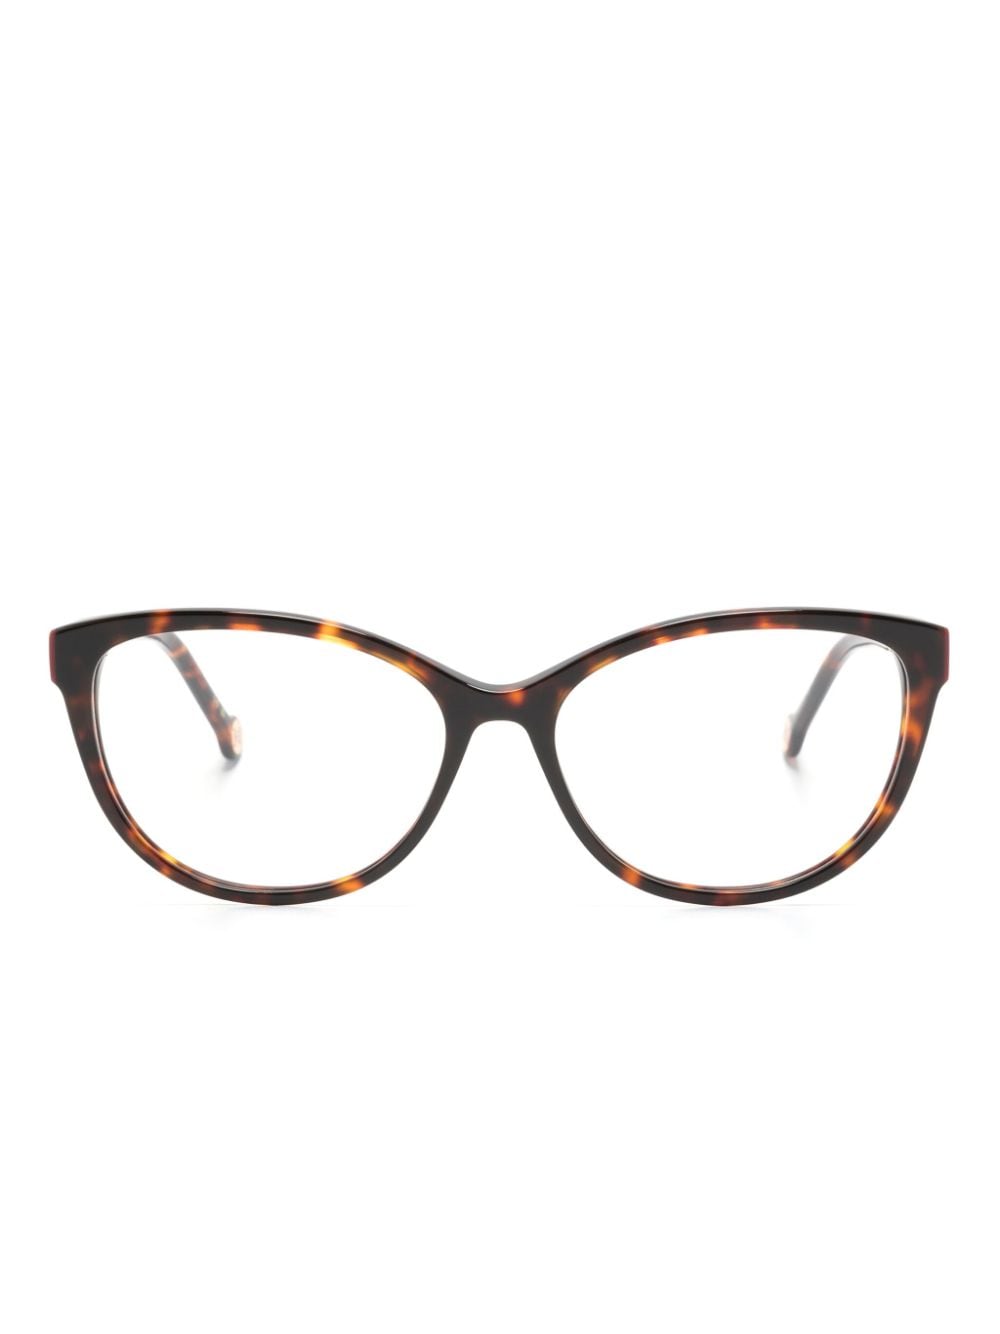 Carolina Herrera Cat-Eye-Brille in Schildpattoptik - Braun von Carolina Herrera